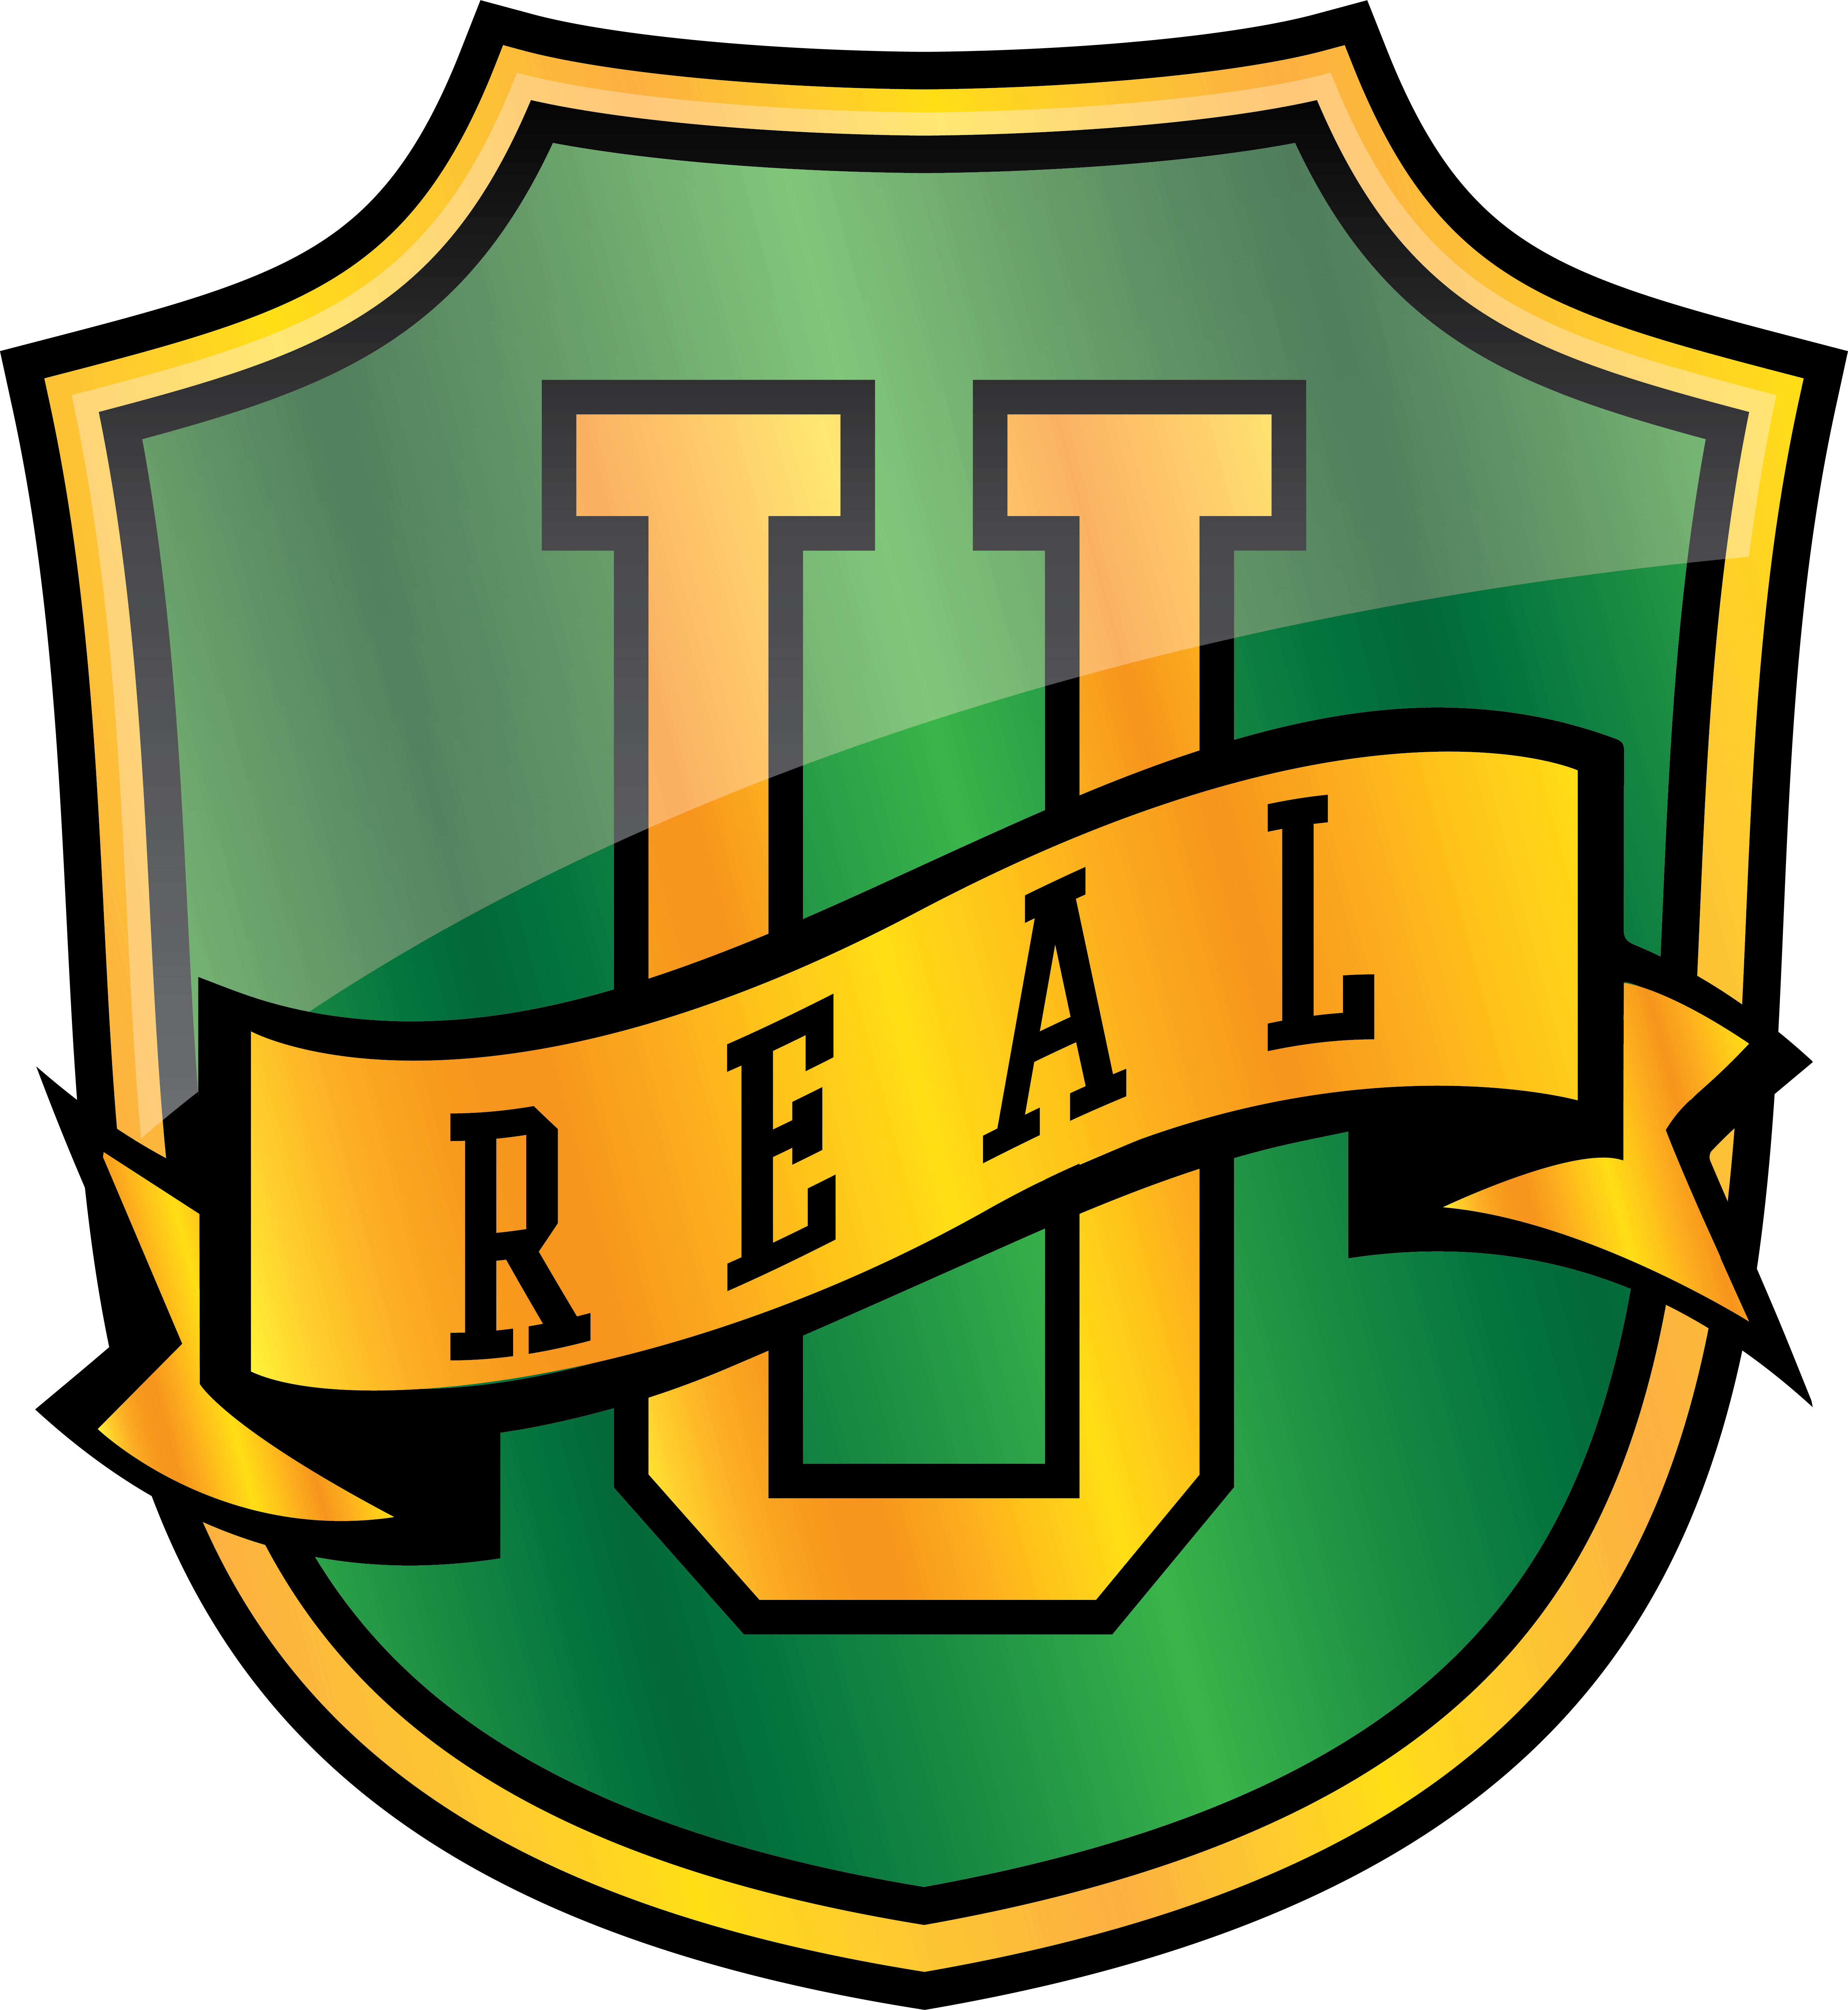 The REAL U, Inc